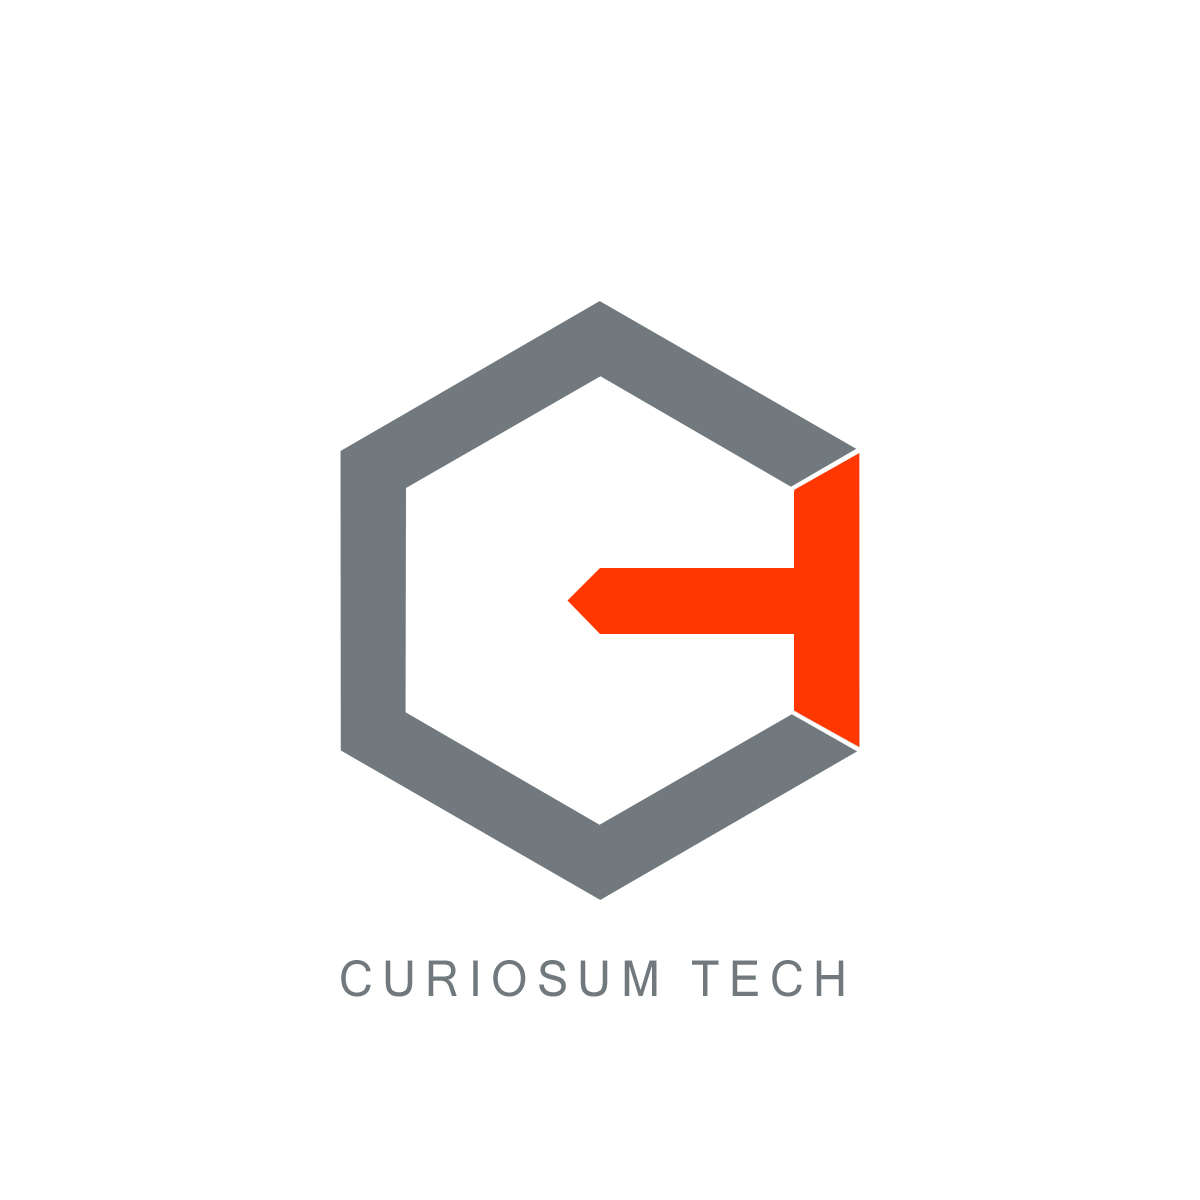 Curiosum Tech